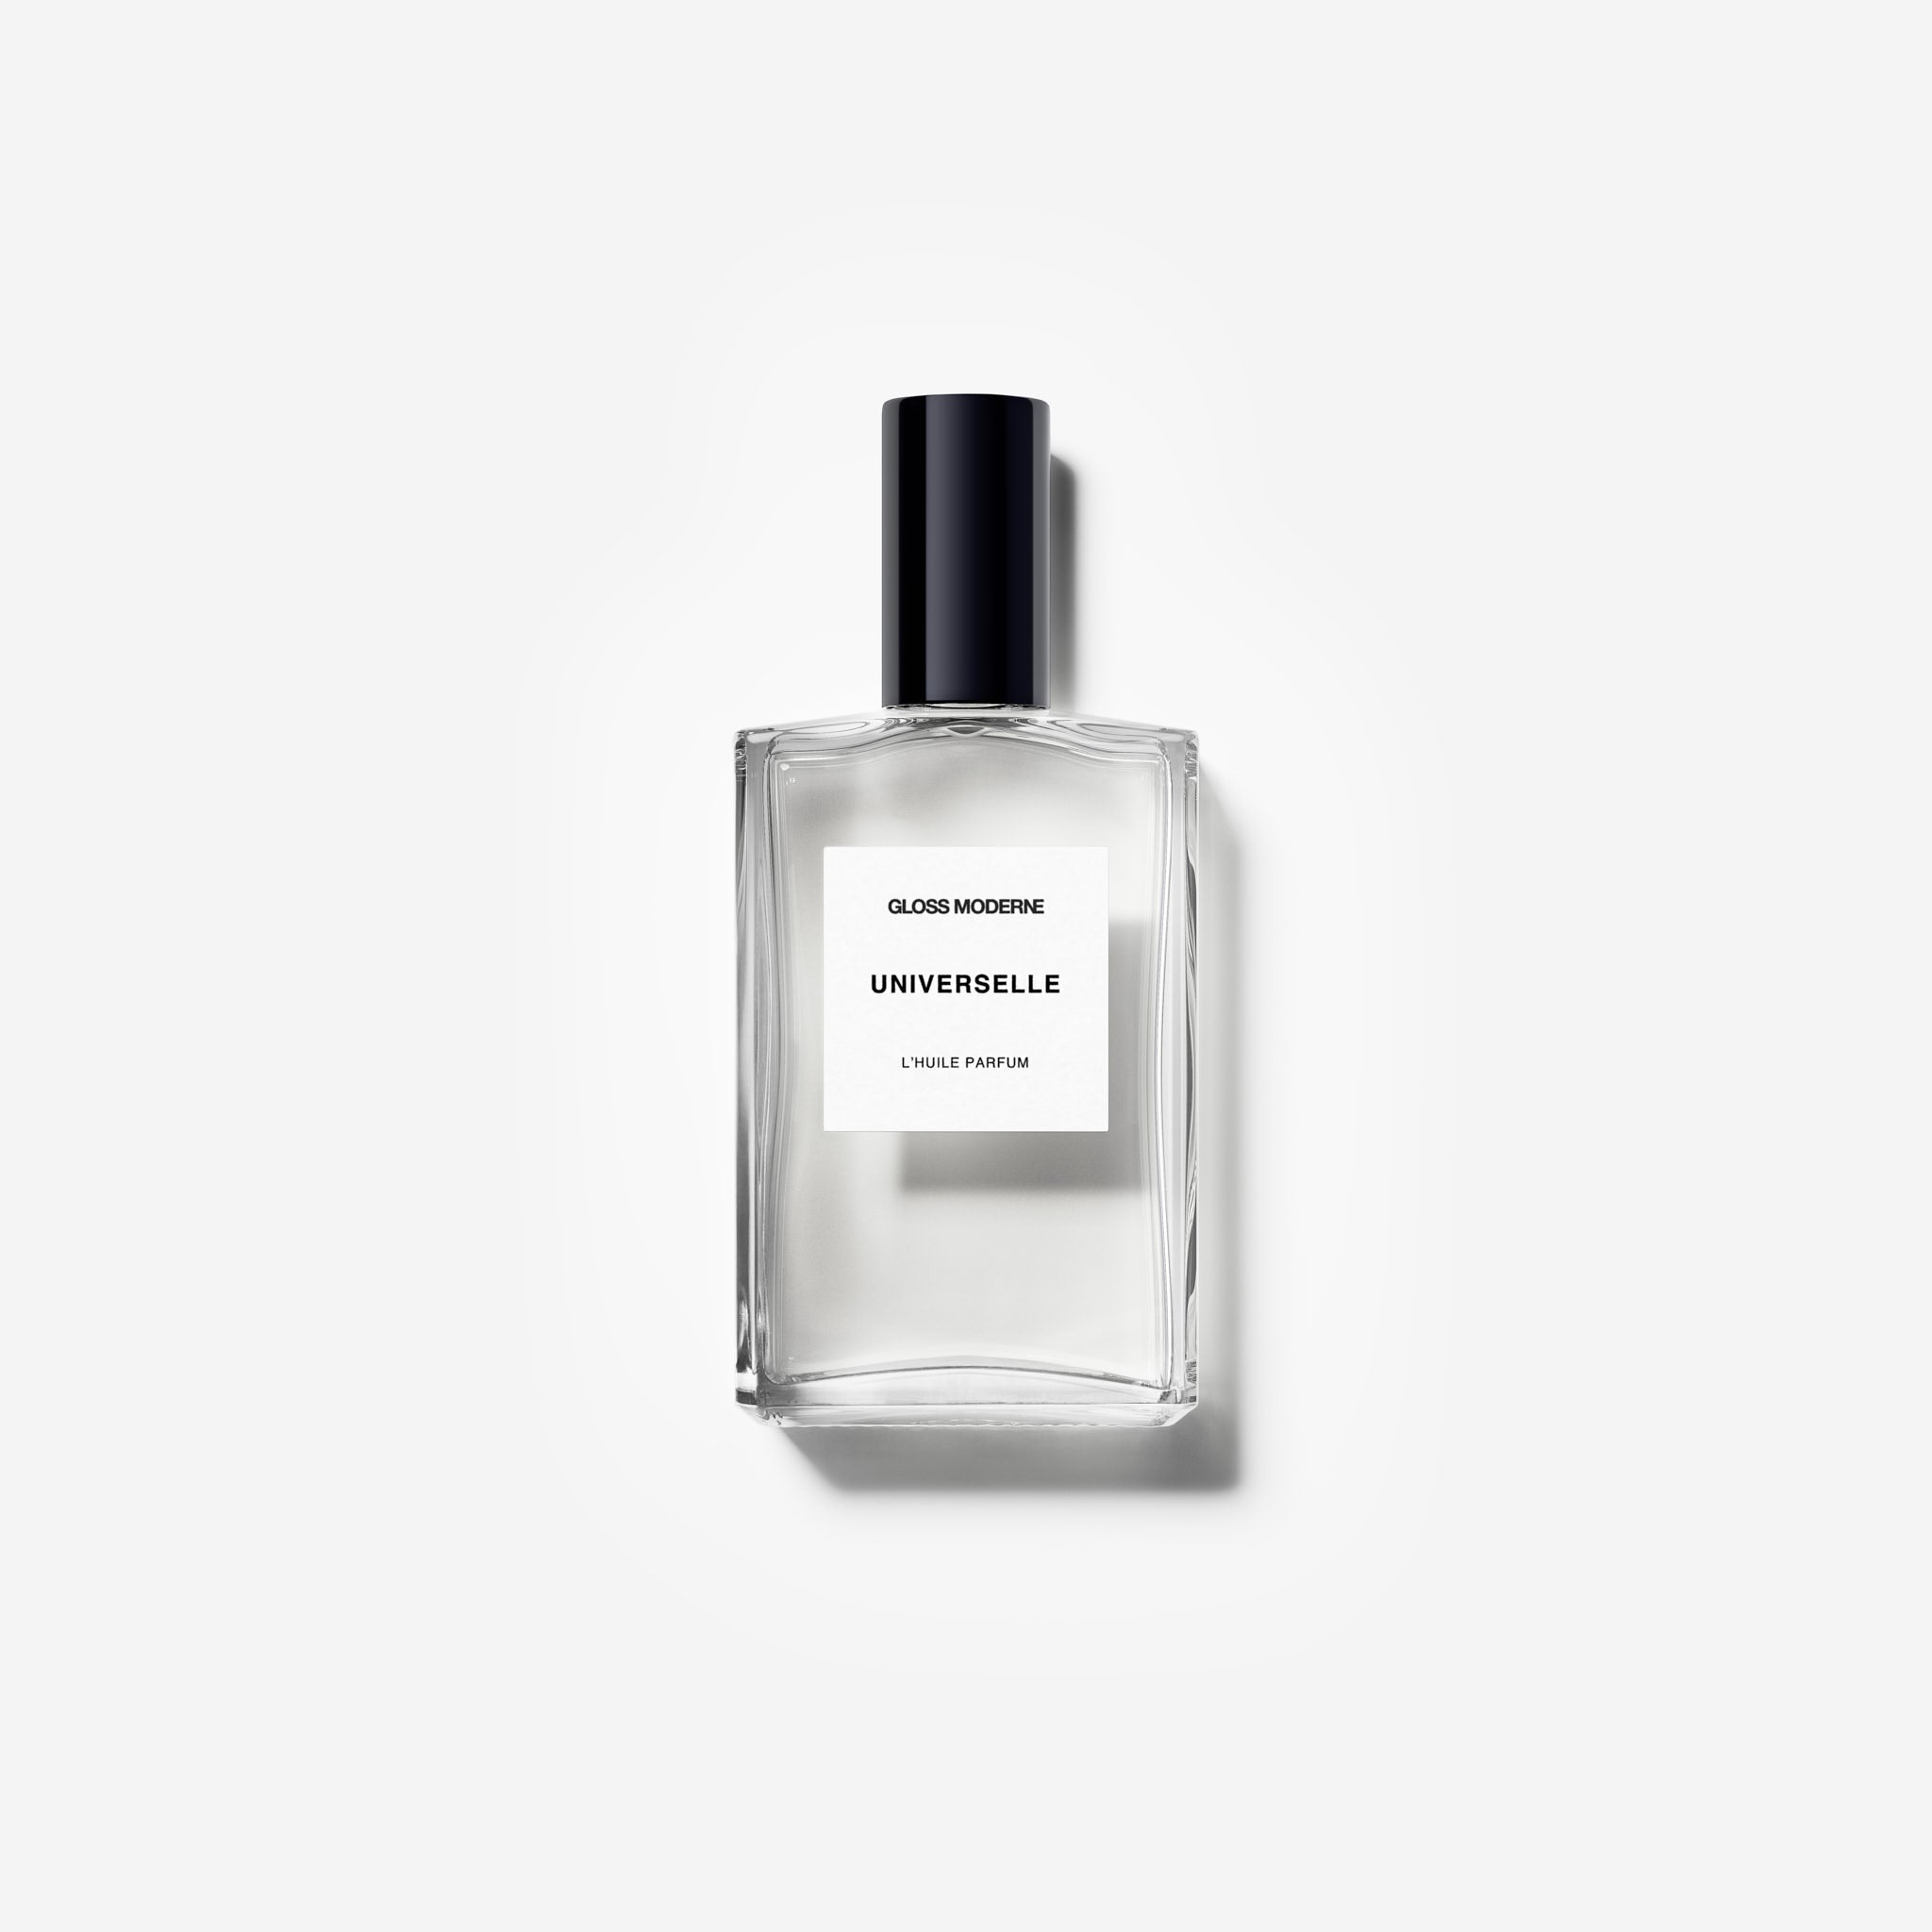 THE MAN COMPANY Men Sky Eau De Parfum - 60 ml